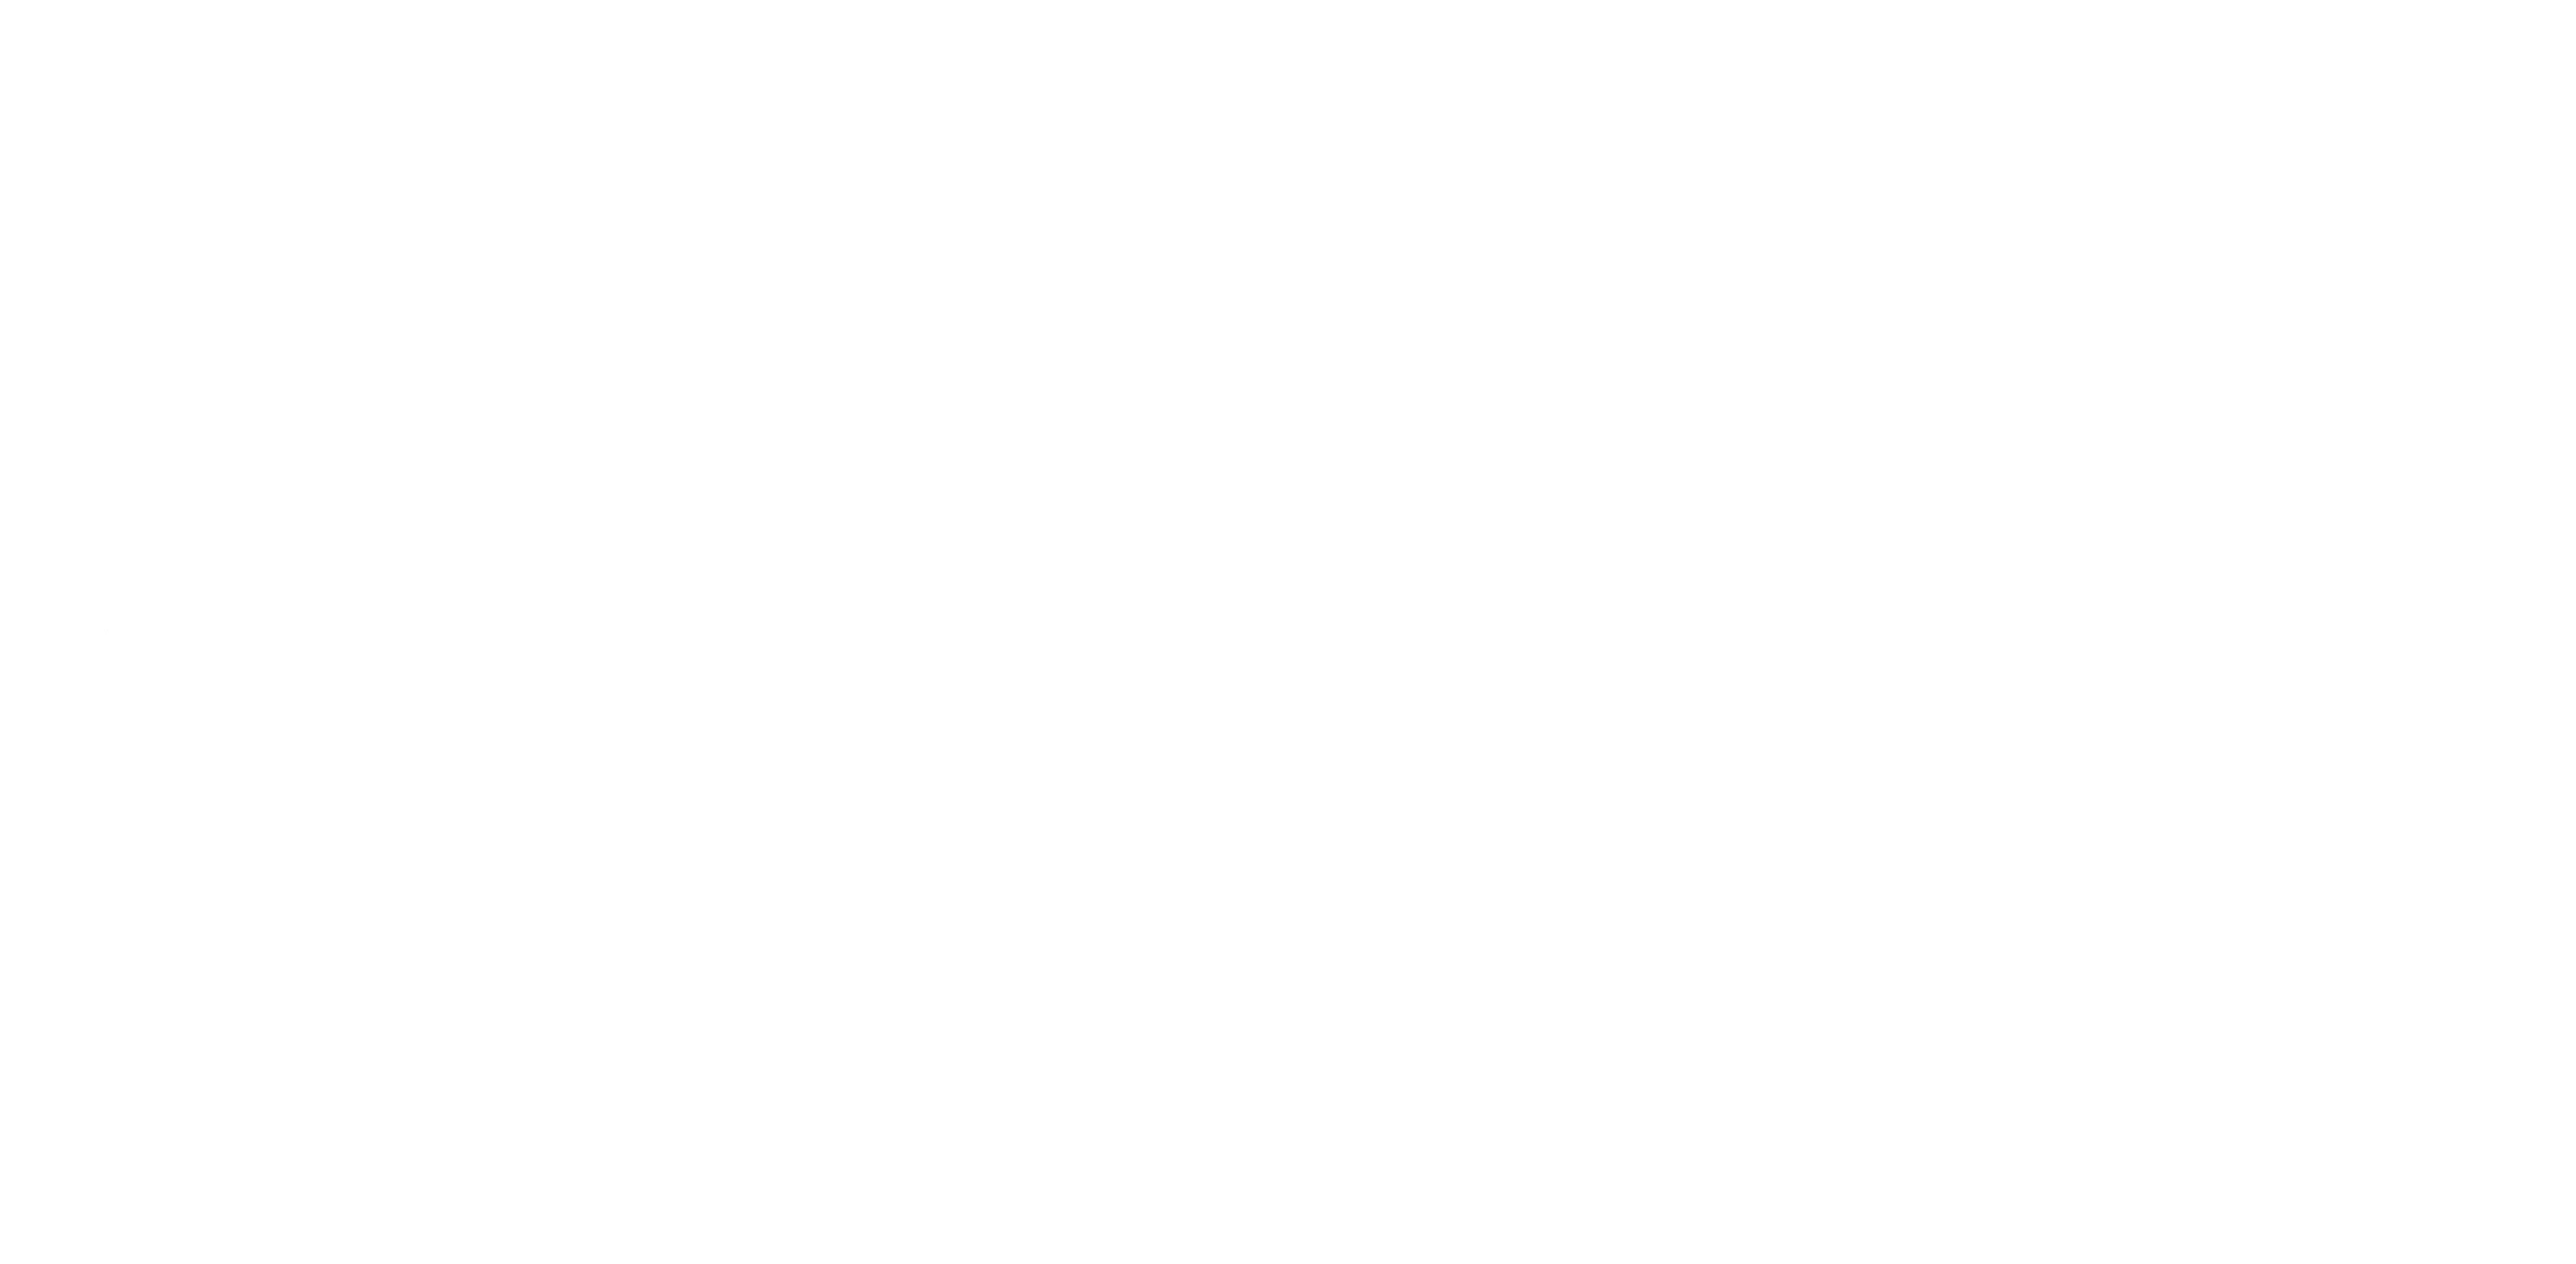 Walton Law Firm Personal Injury Lawyer Near Me